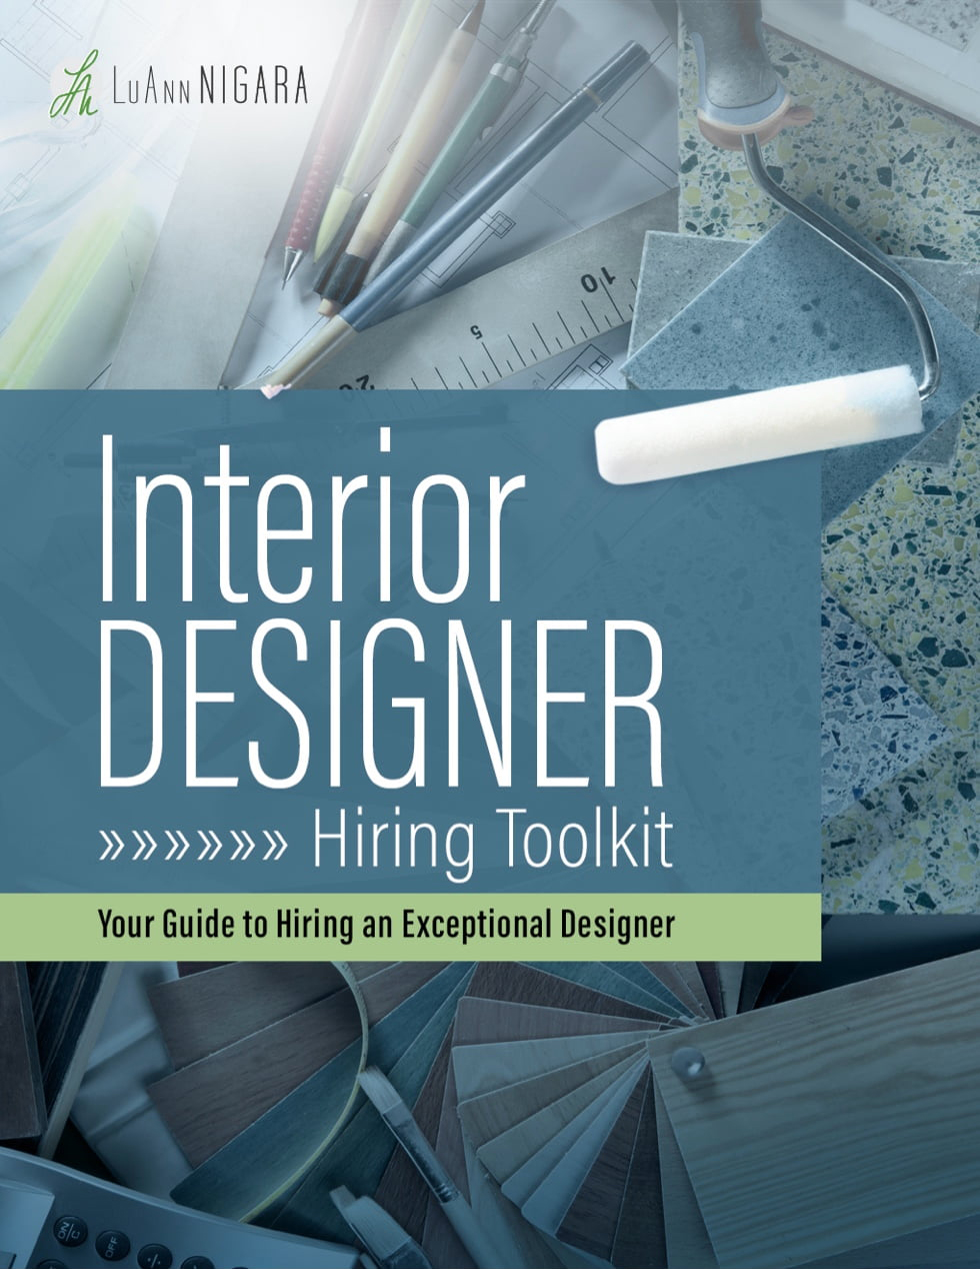 Interior Designer <br>Hiring Toolkit 2